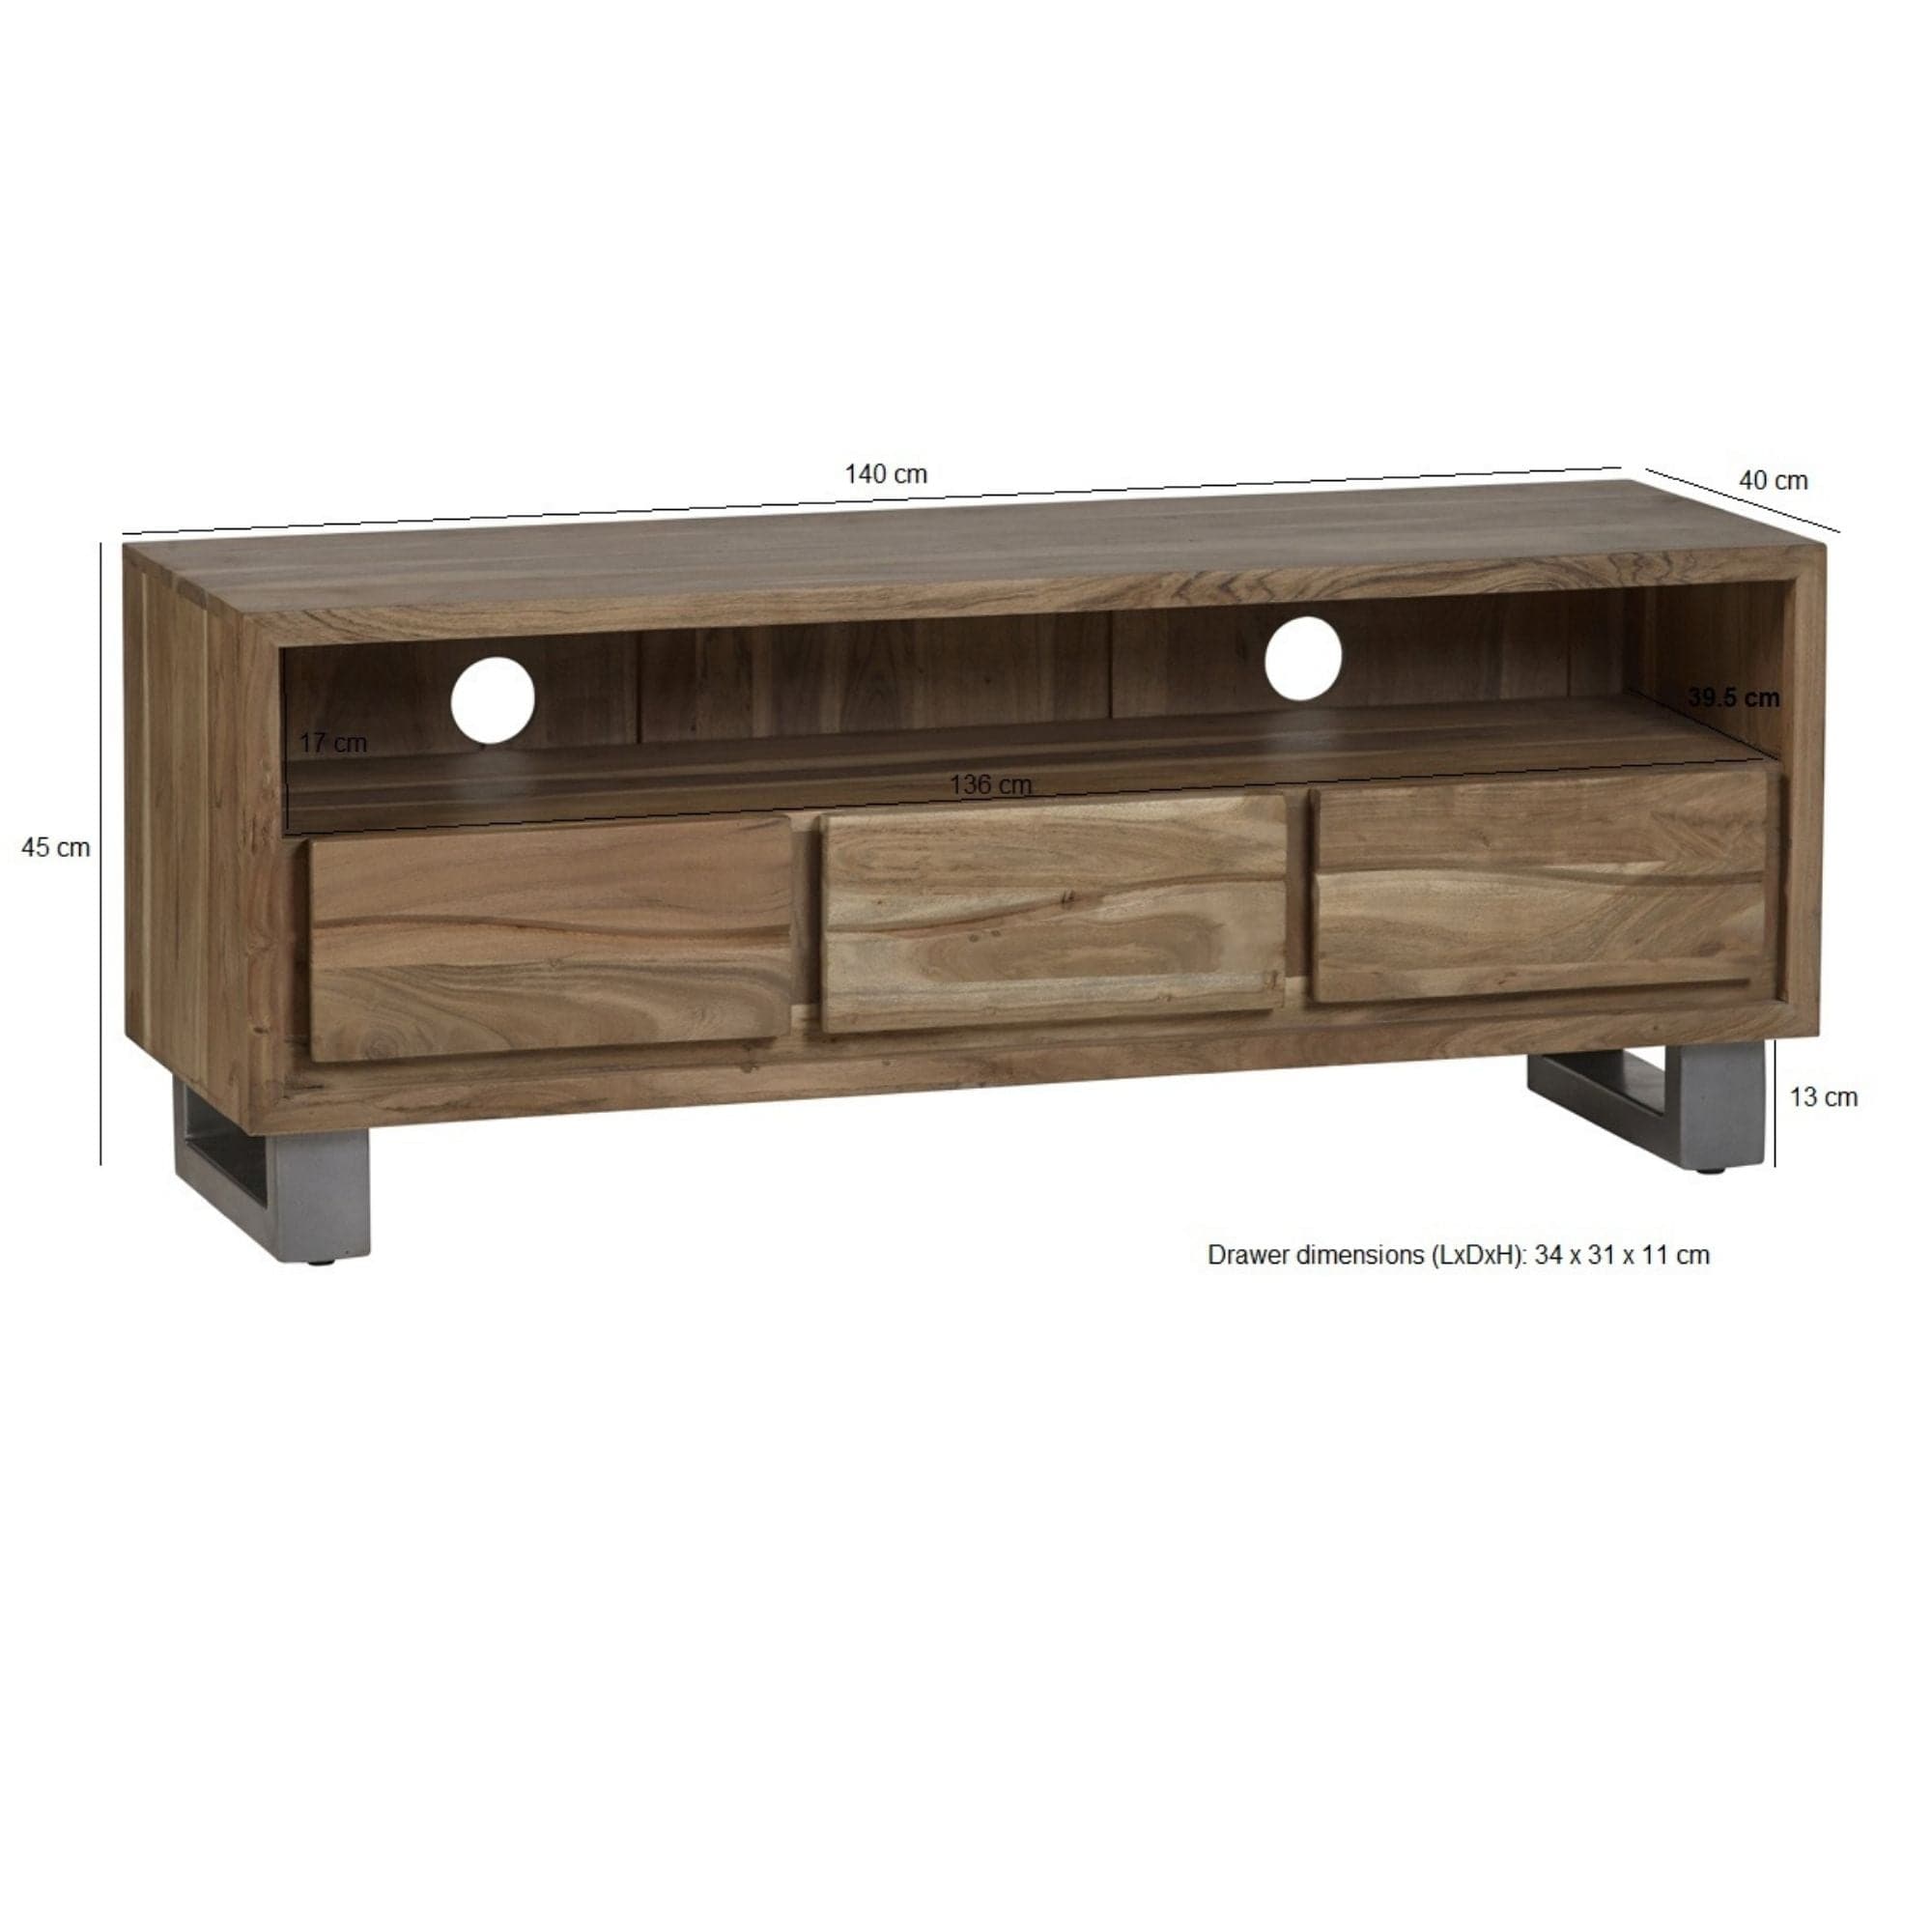 Live edge solid acacia wood TV stand with metal legs | malletandplane.com